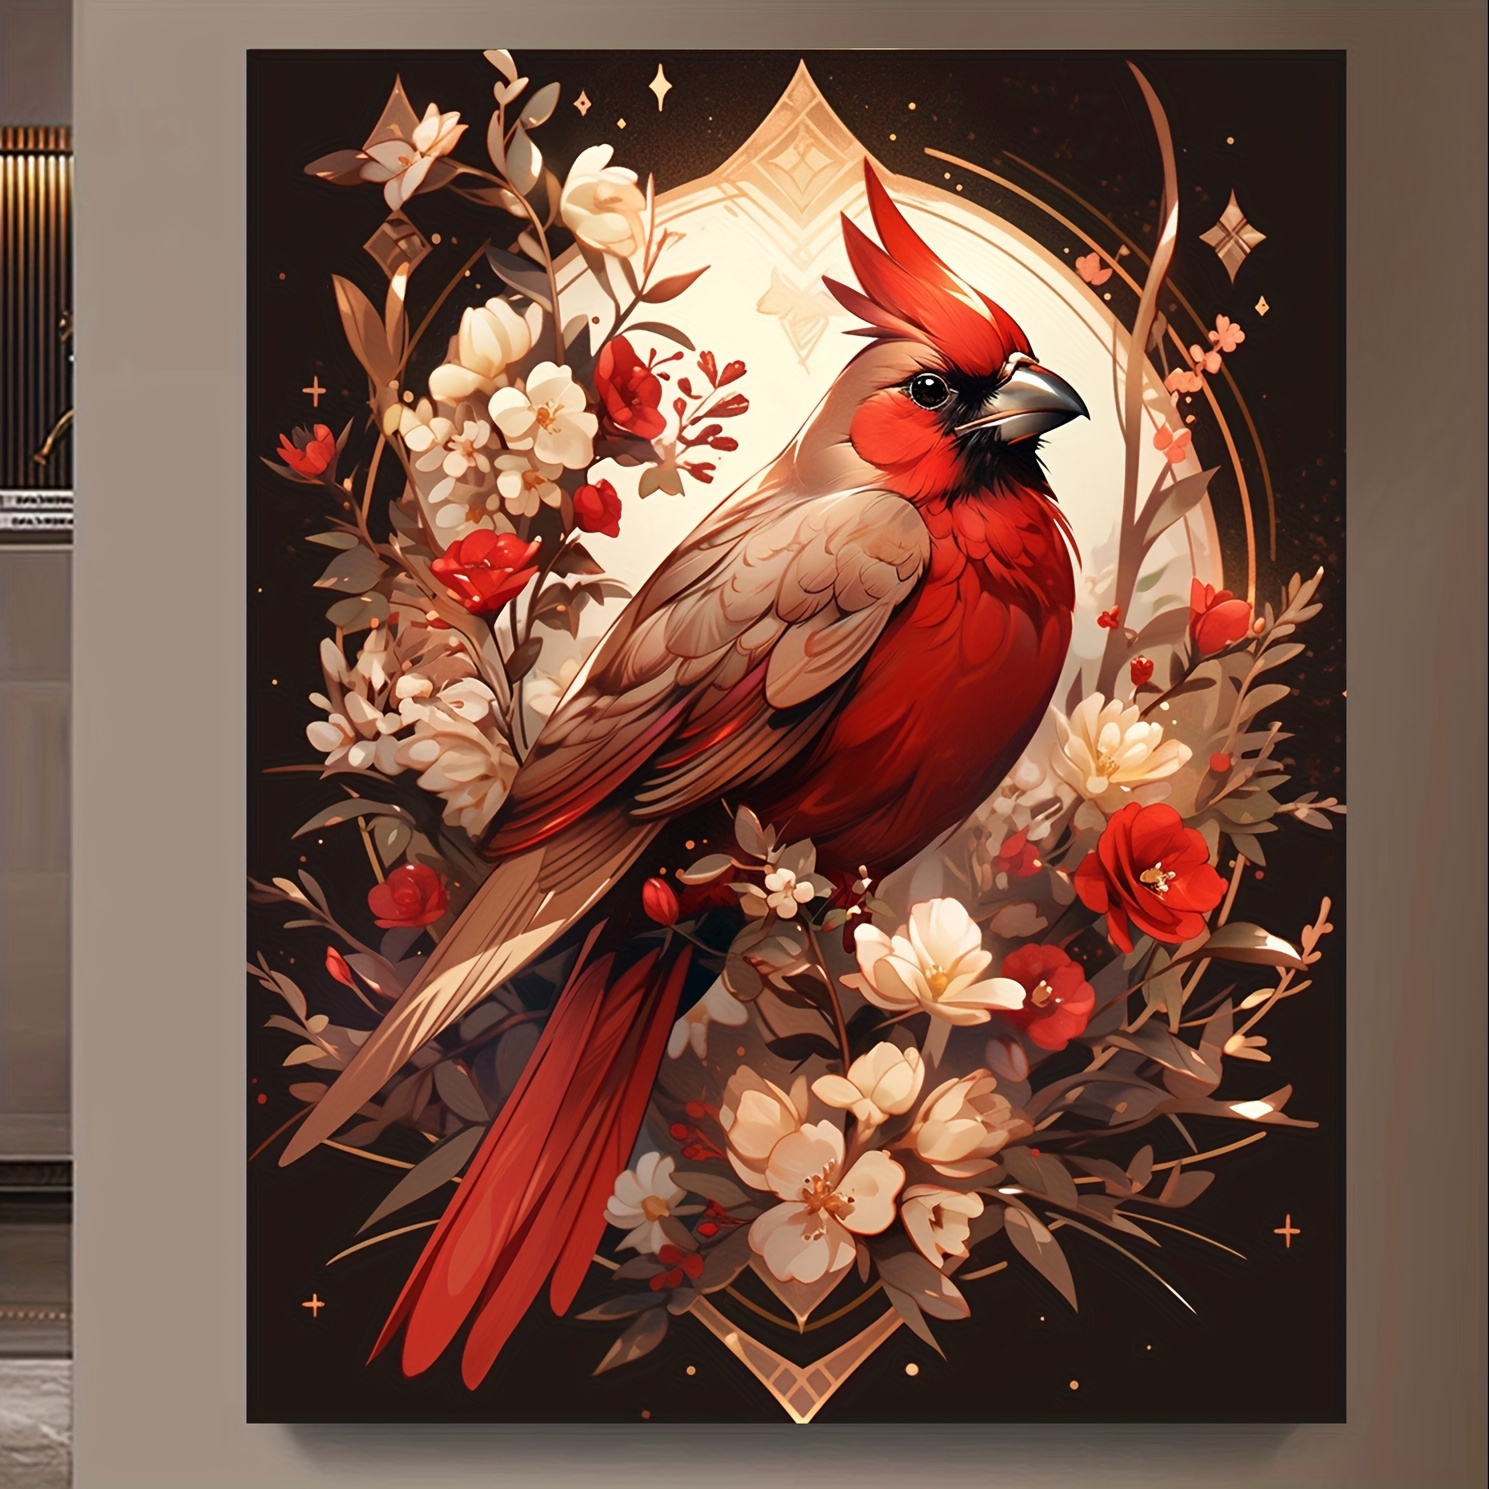 IY Diamond Painting Kits for Adults Cardinal Love Birds 5D Diamond